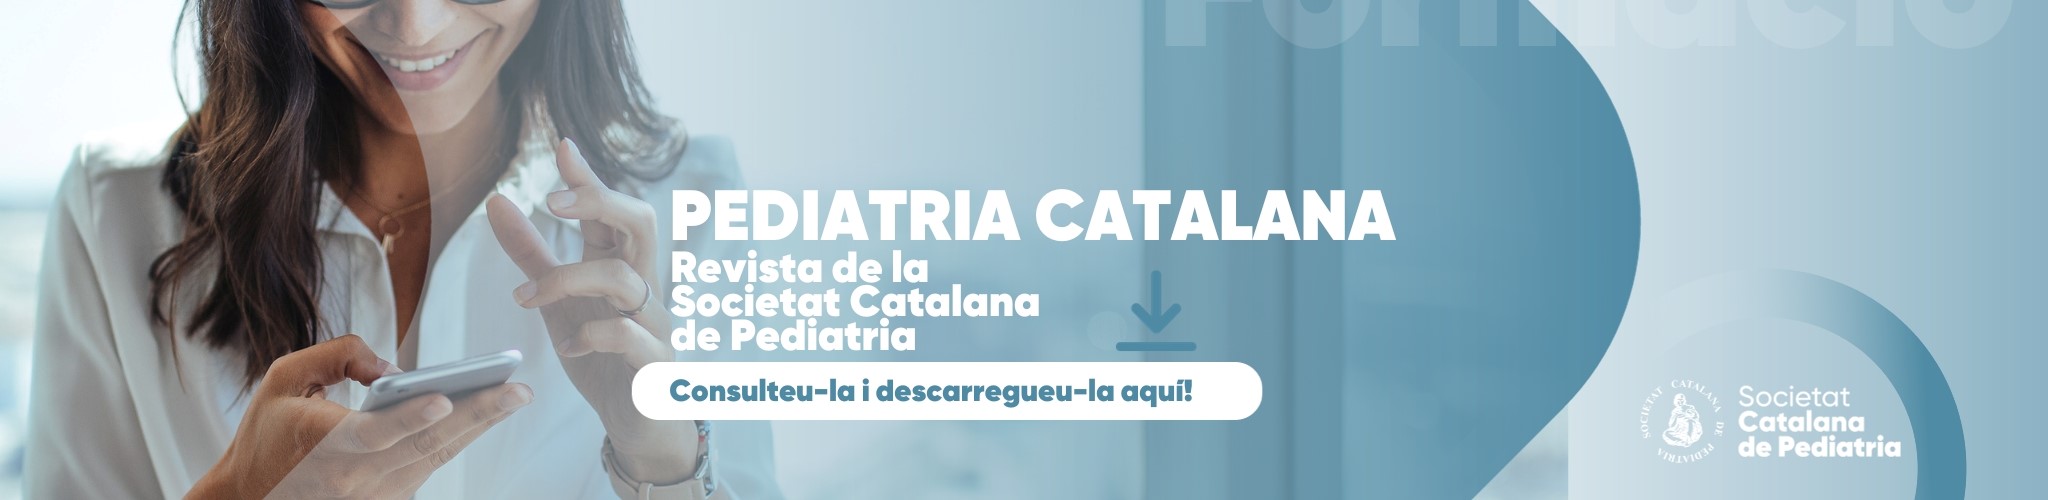 Revista Pediatria Catalana